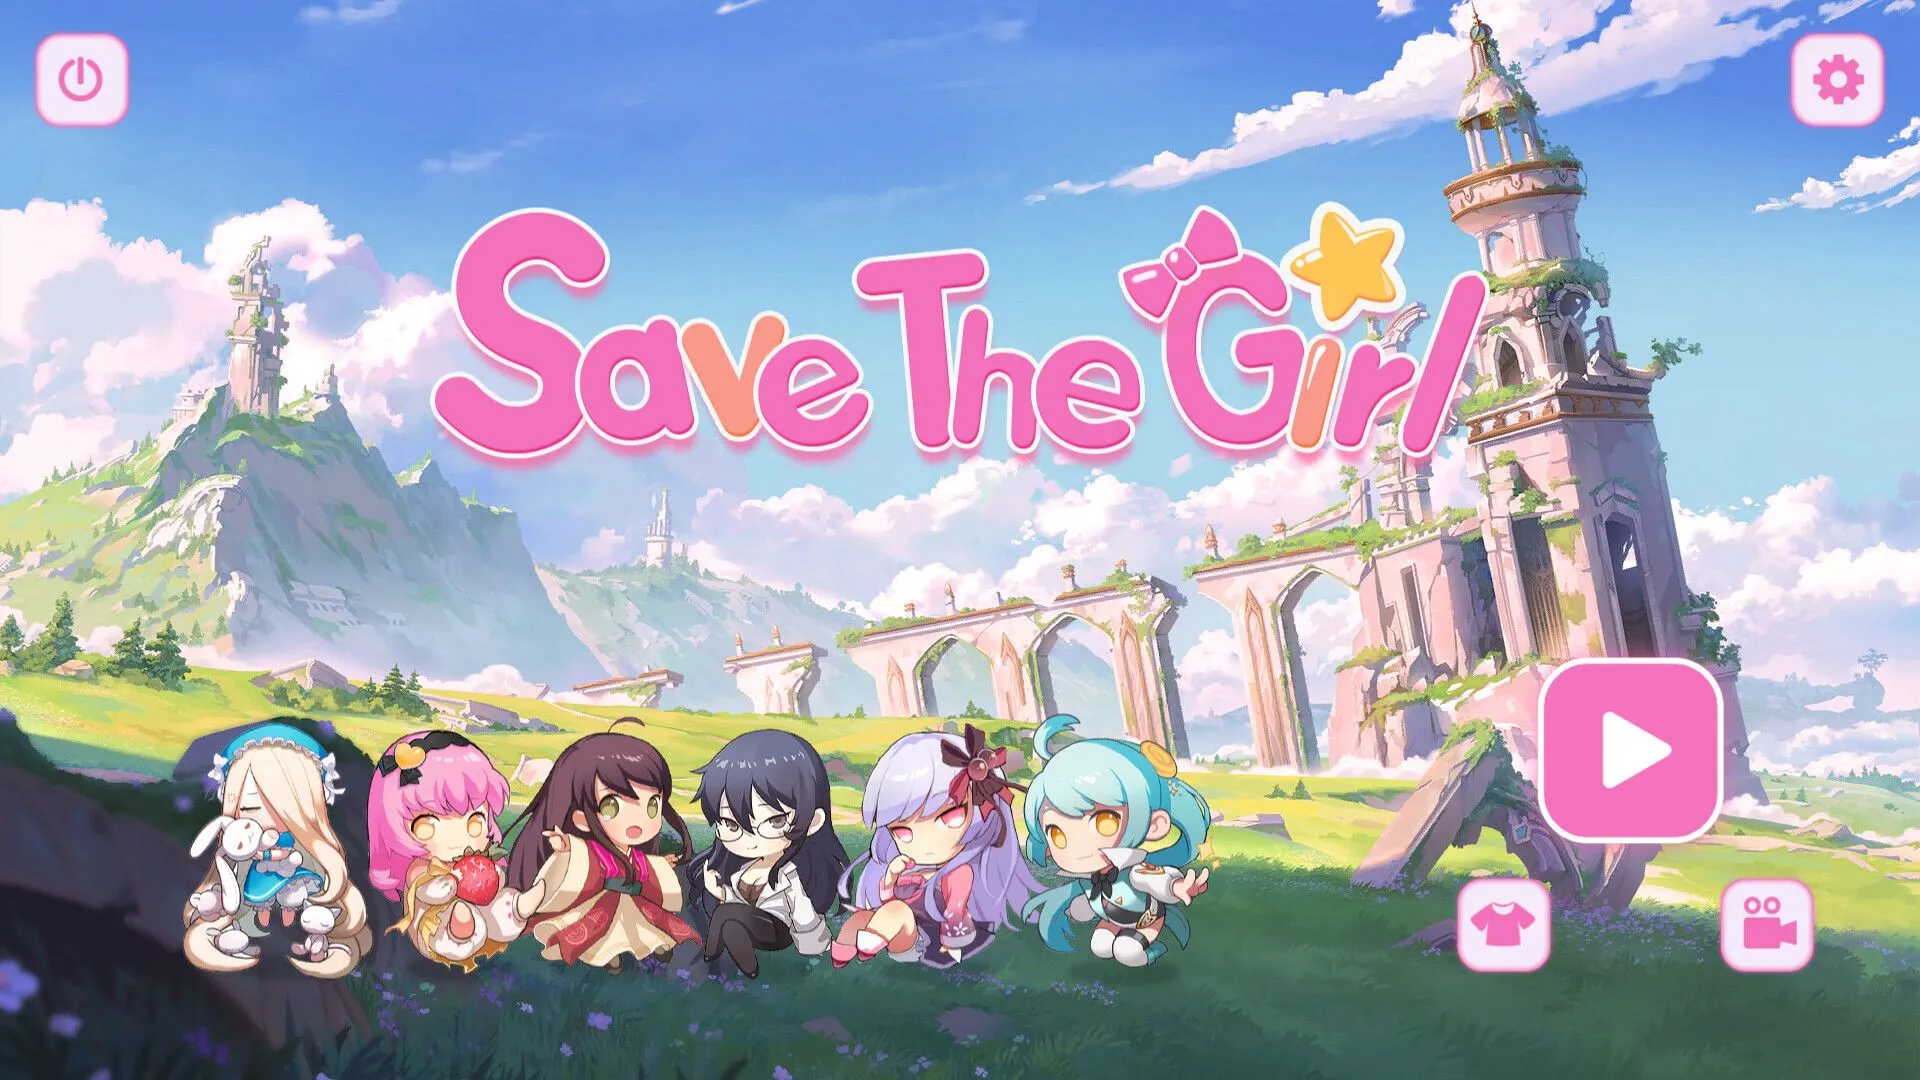 Save the Girls main image